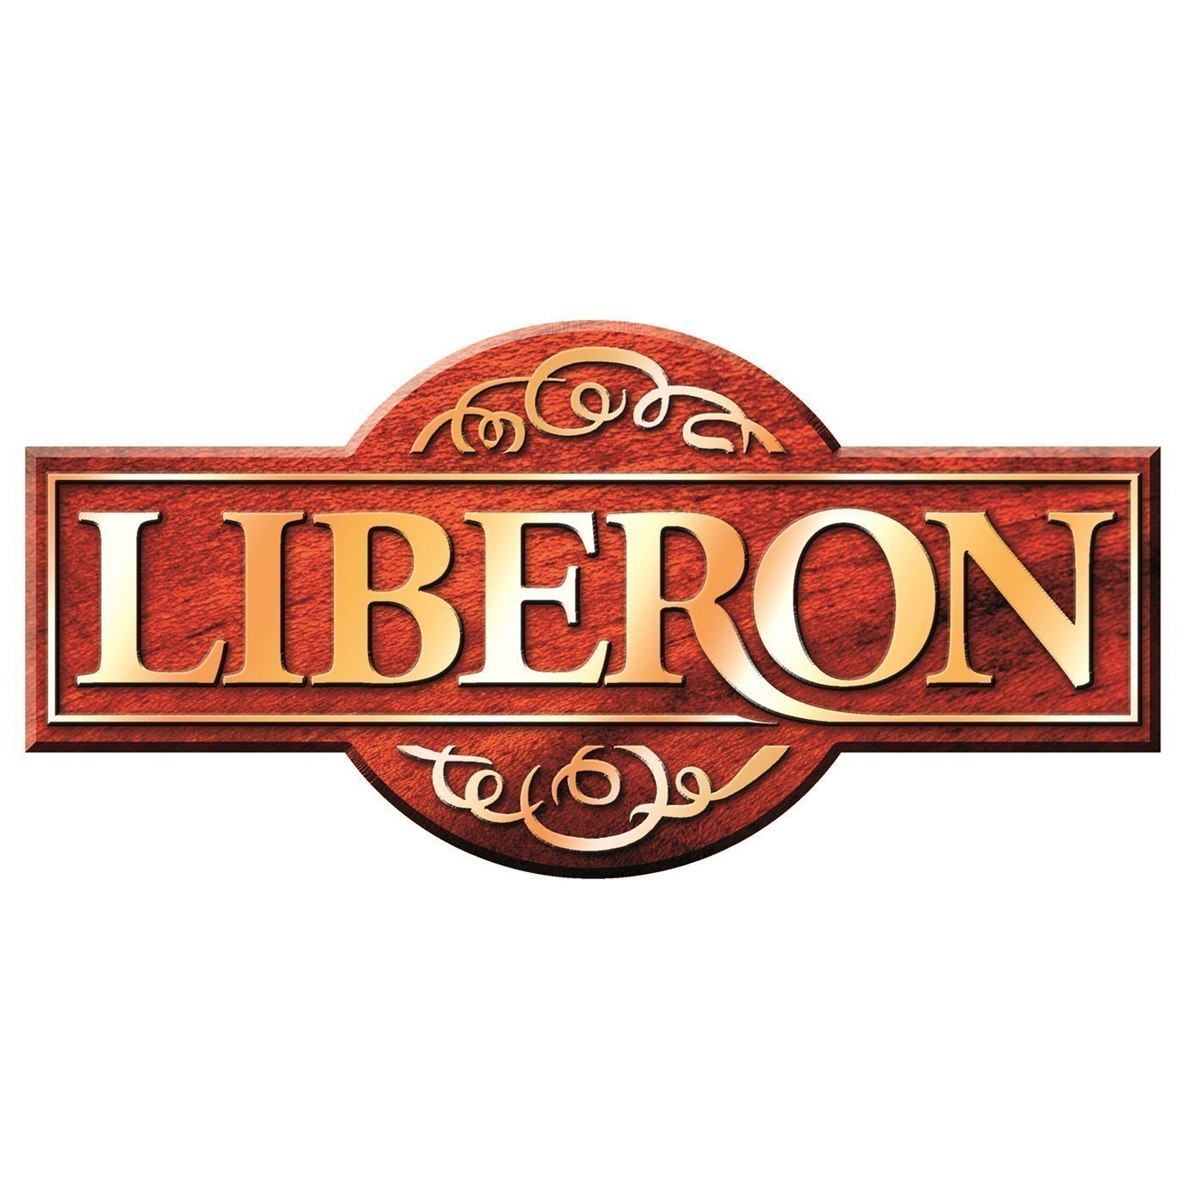 Where to buy Liberon Beeswax Paste